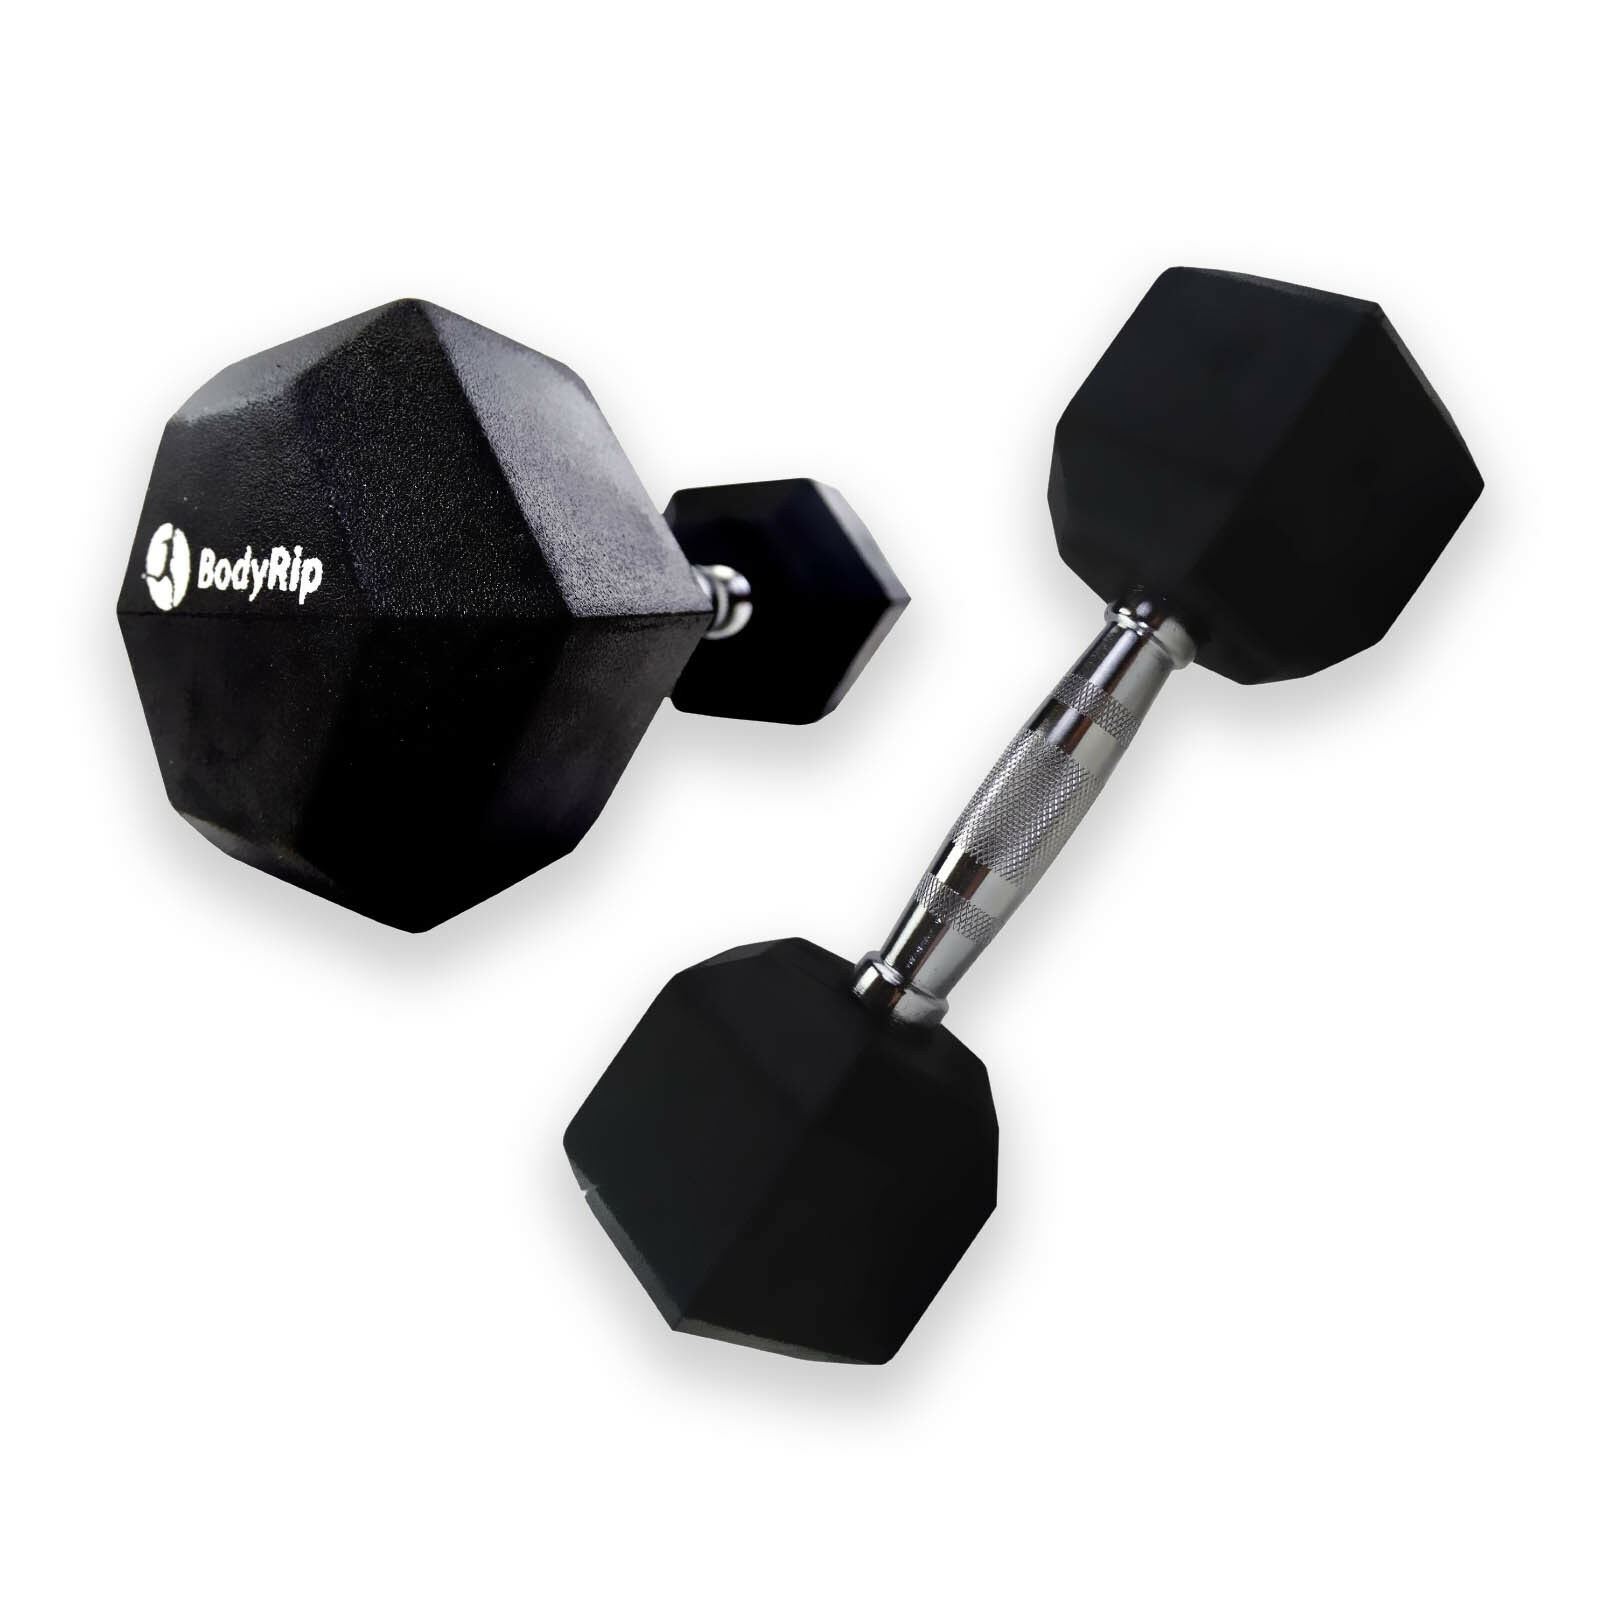 Hexagonal Dumbbells Weight Set Pair 5kgGym Exercise Rubber Encased by BodyRip 